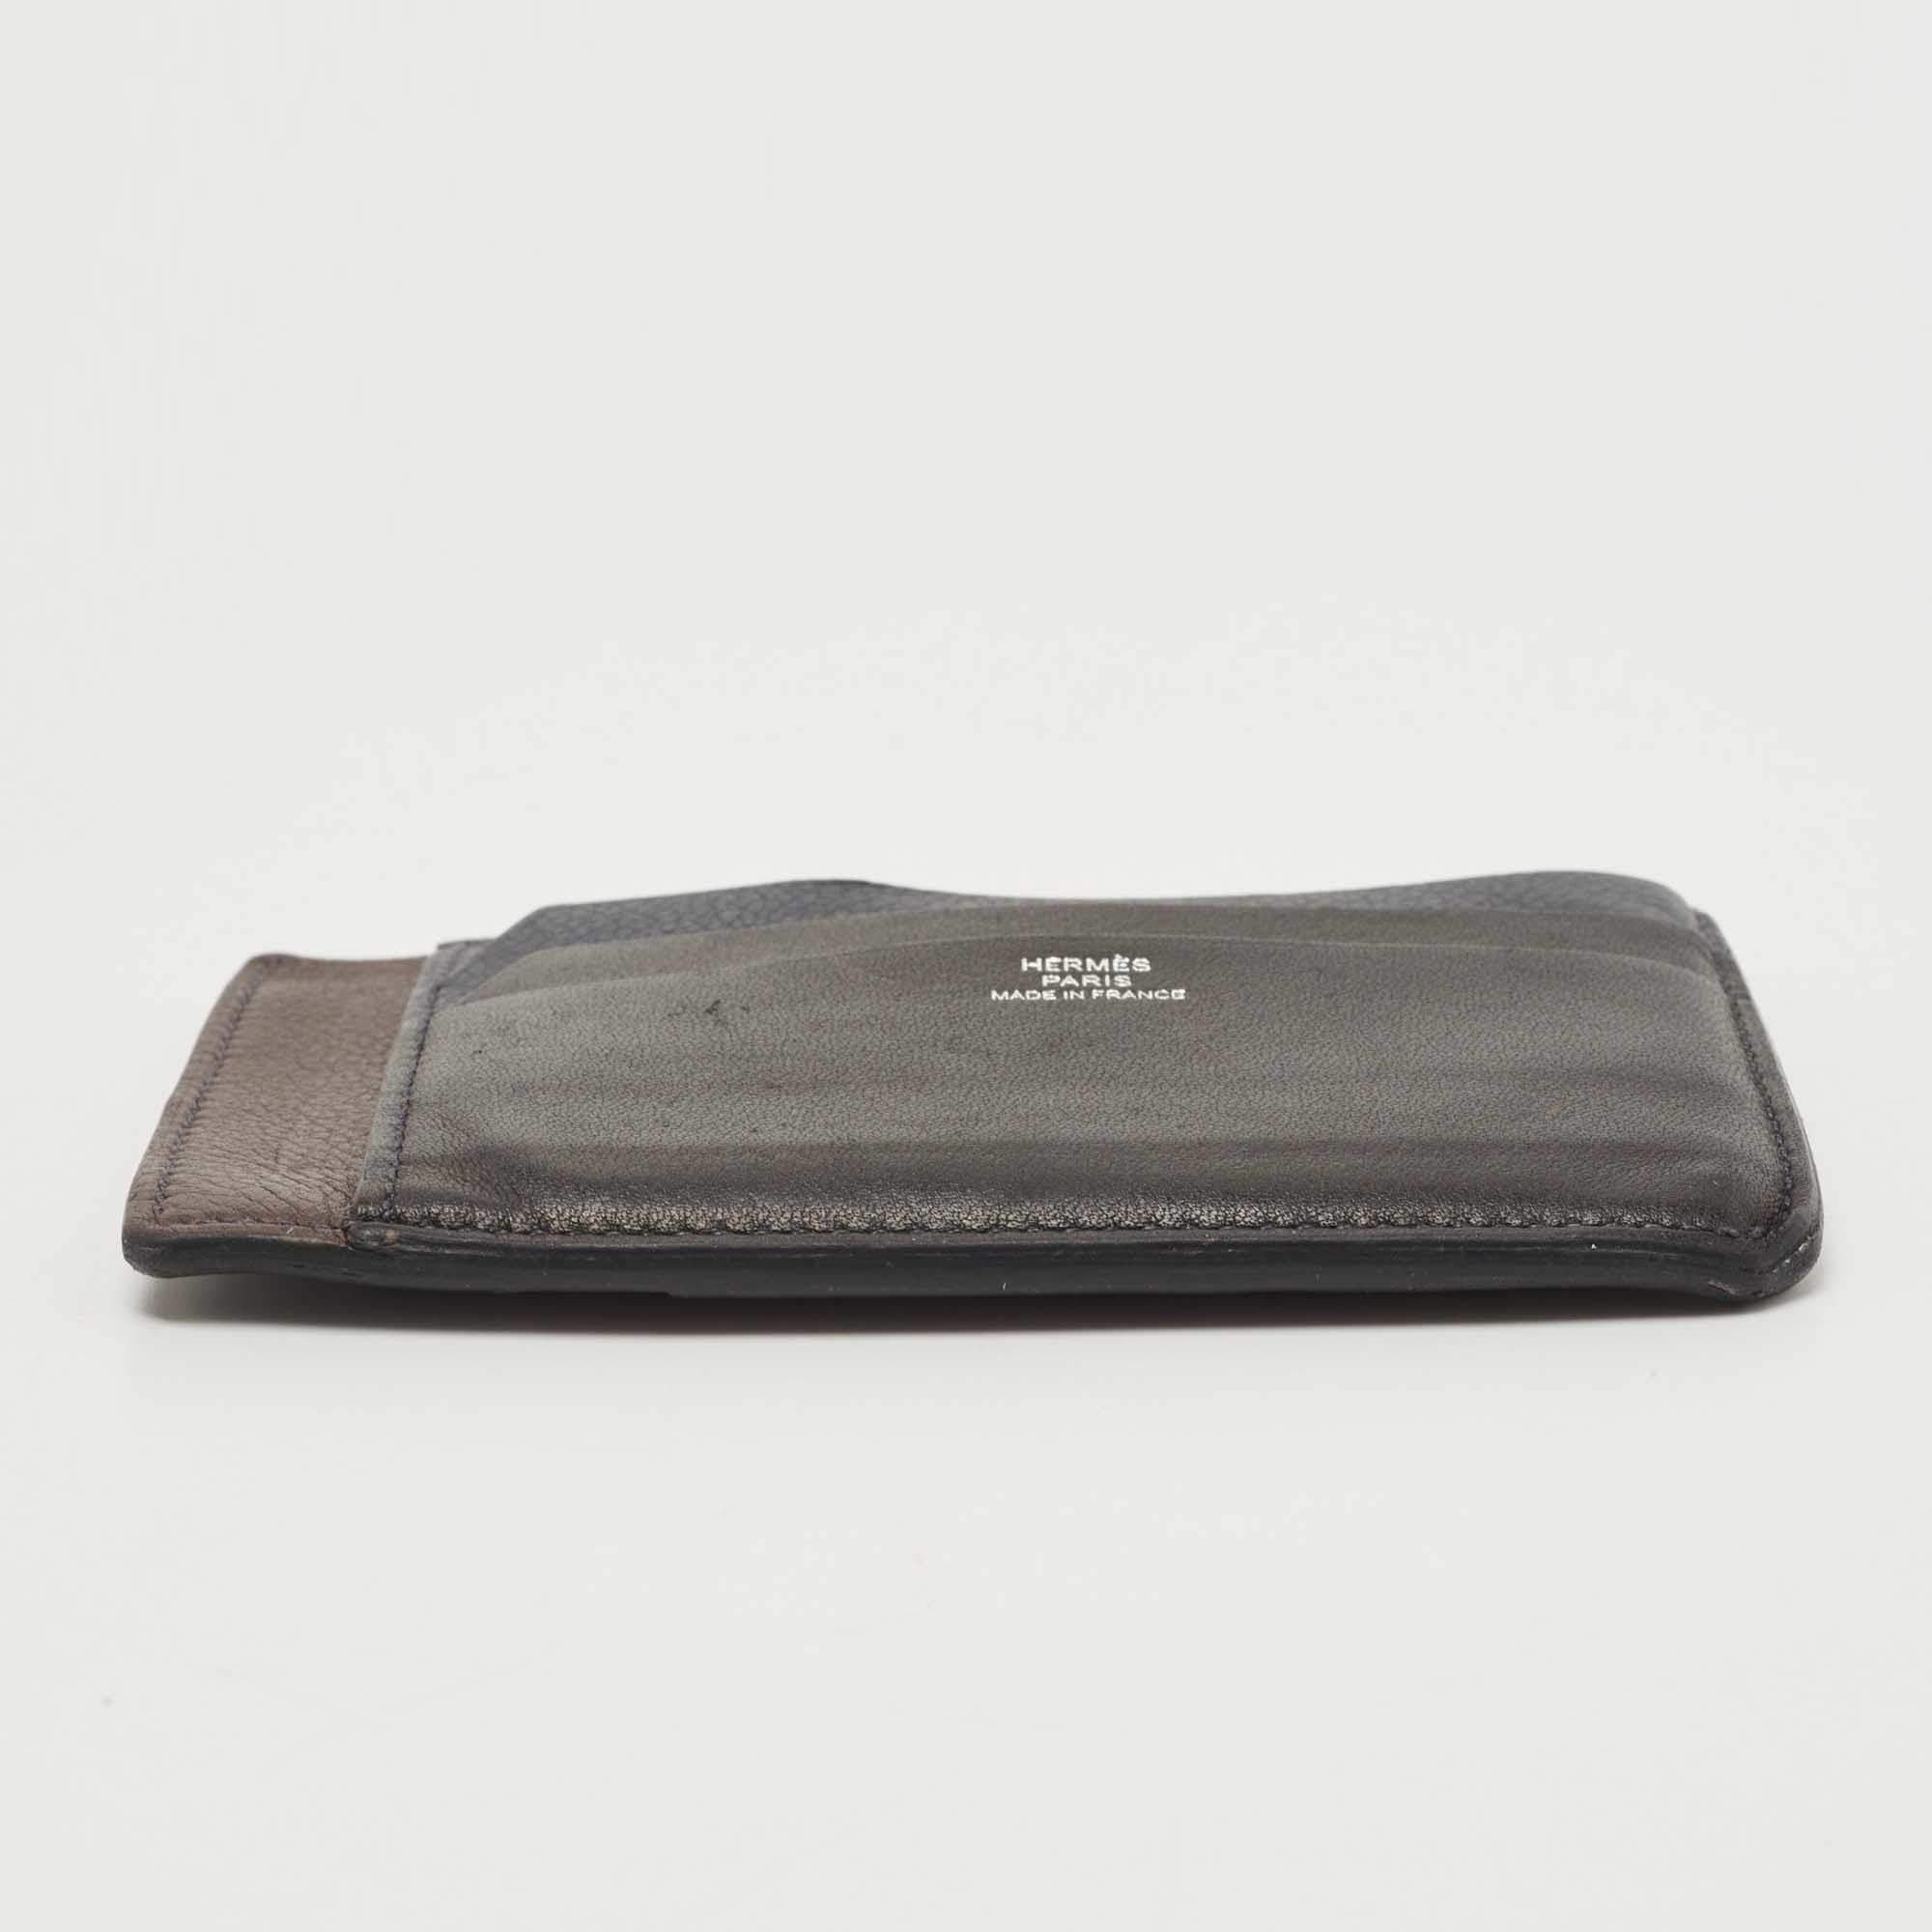 Hermes, business card holder, cognac-coloured smooth lea…